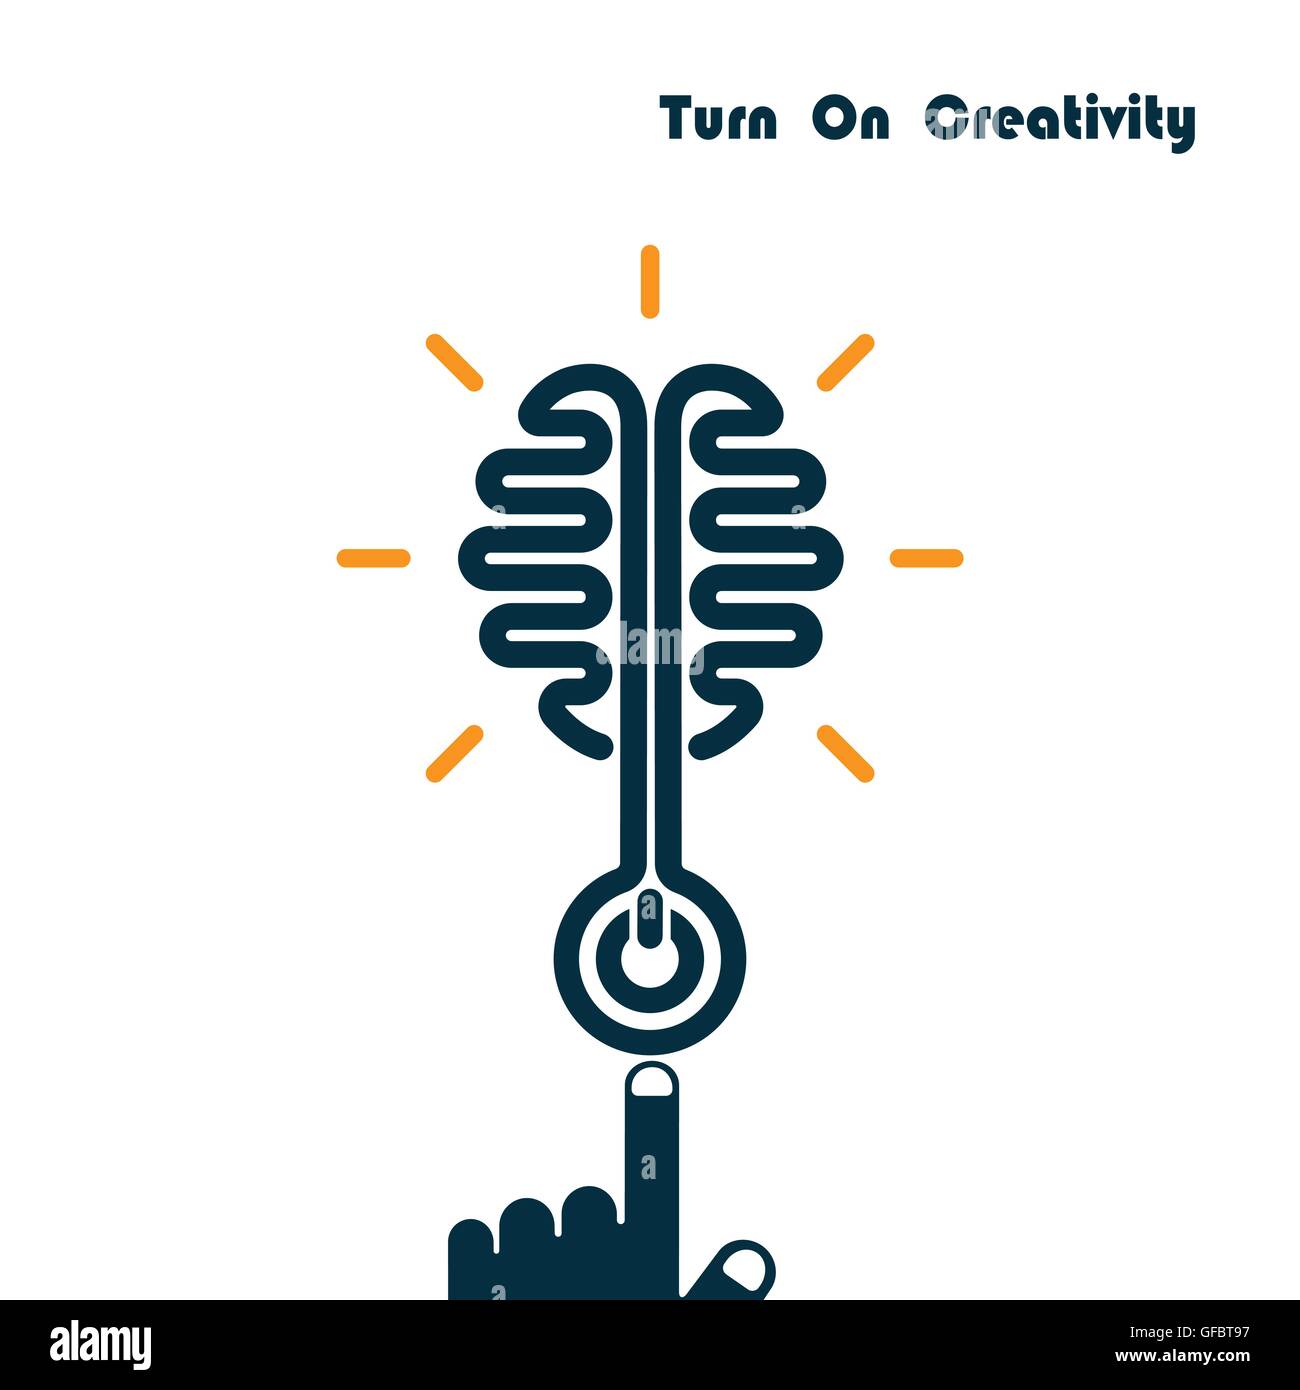 Creativity Brain Opening Concept.Creative Brain Abstract Vector Logo Design Template. Corporate Business Industrial logo Stock Vector